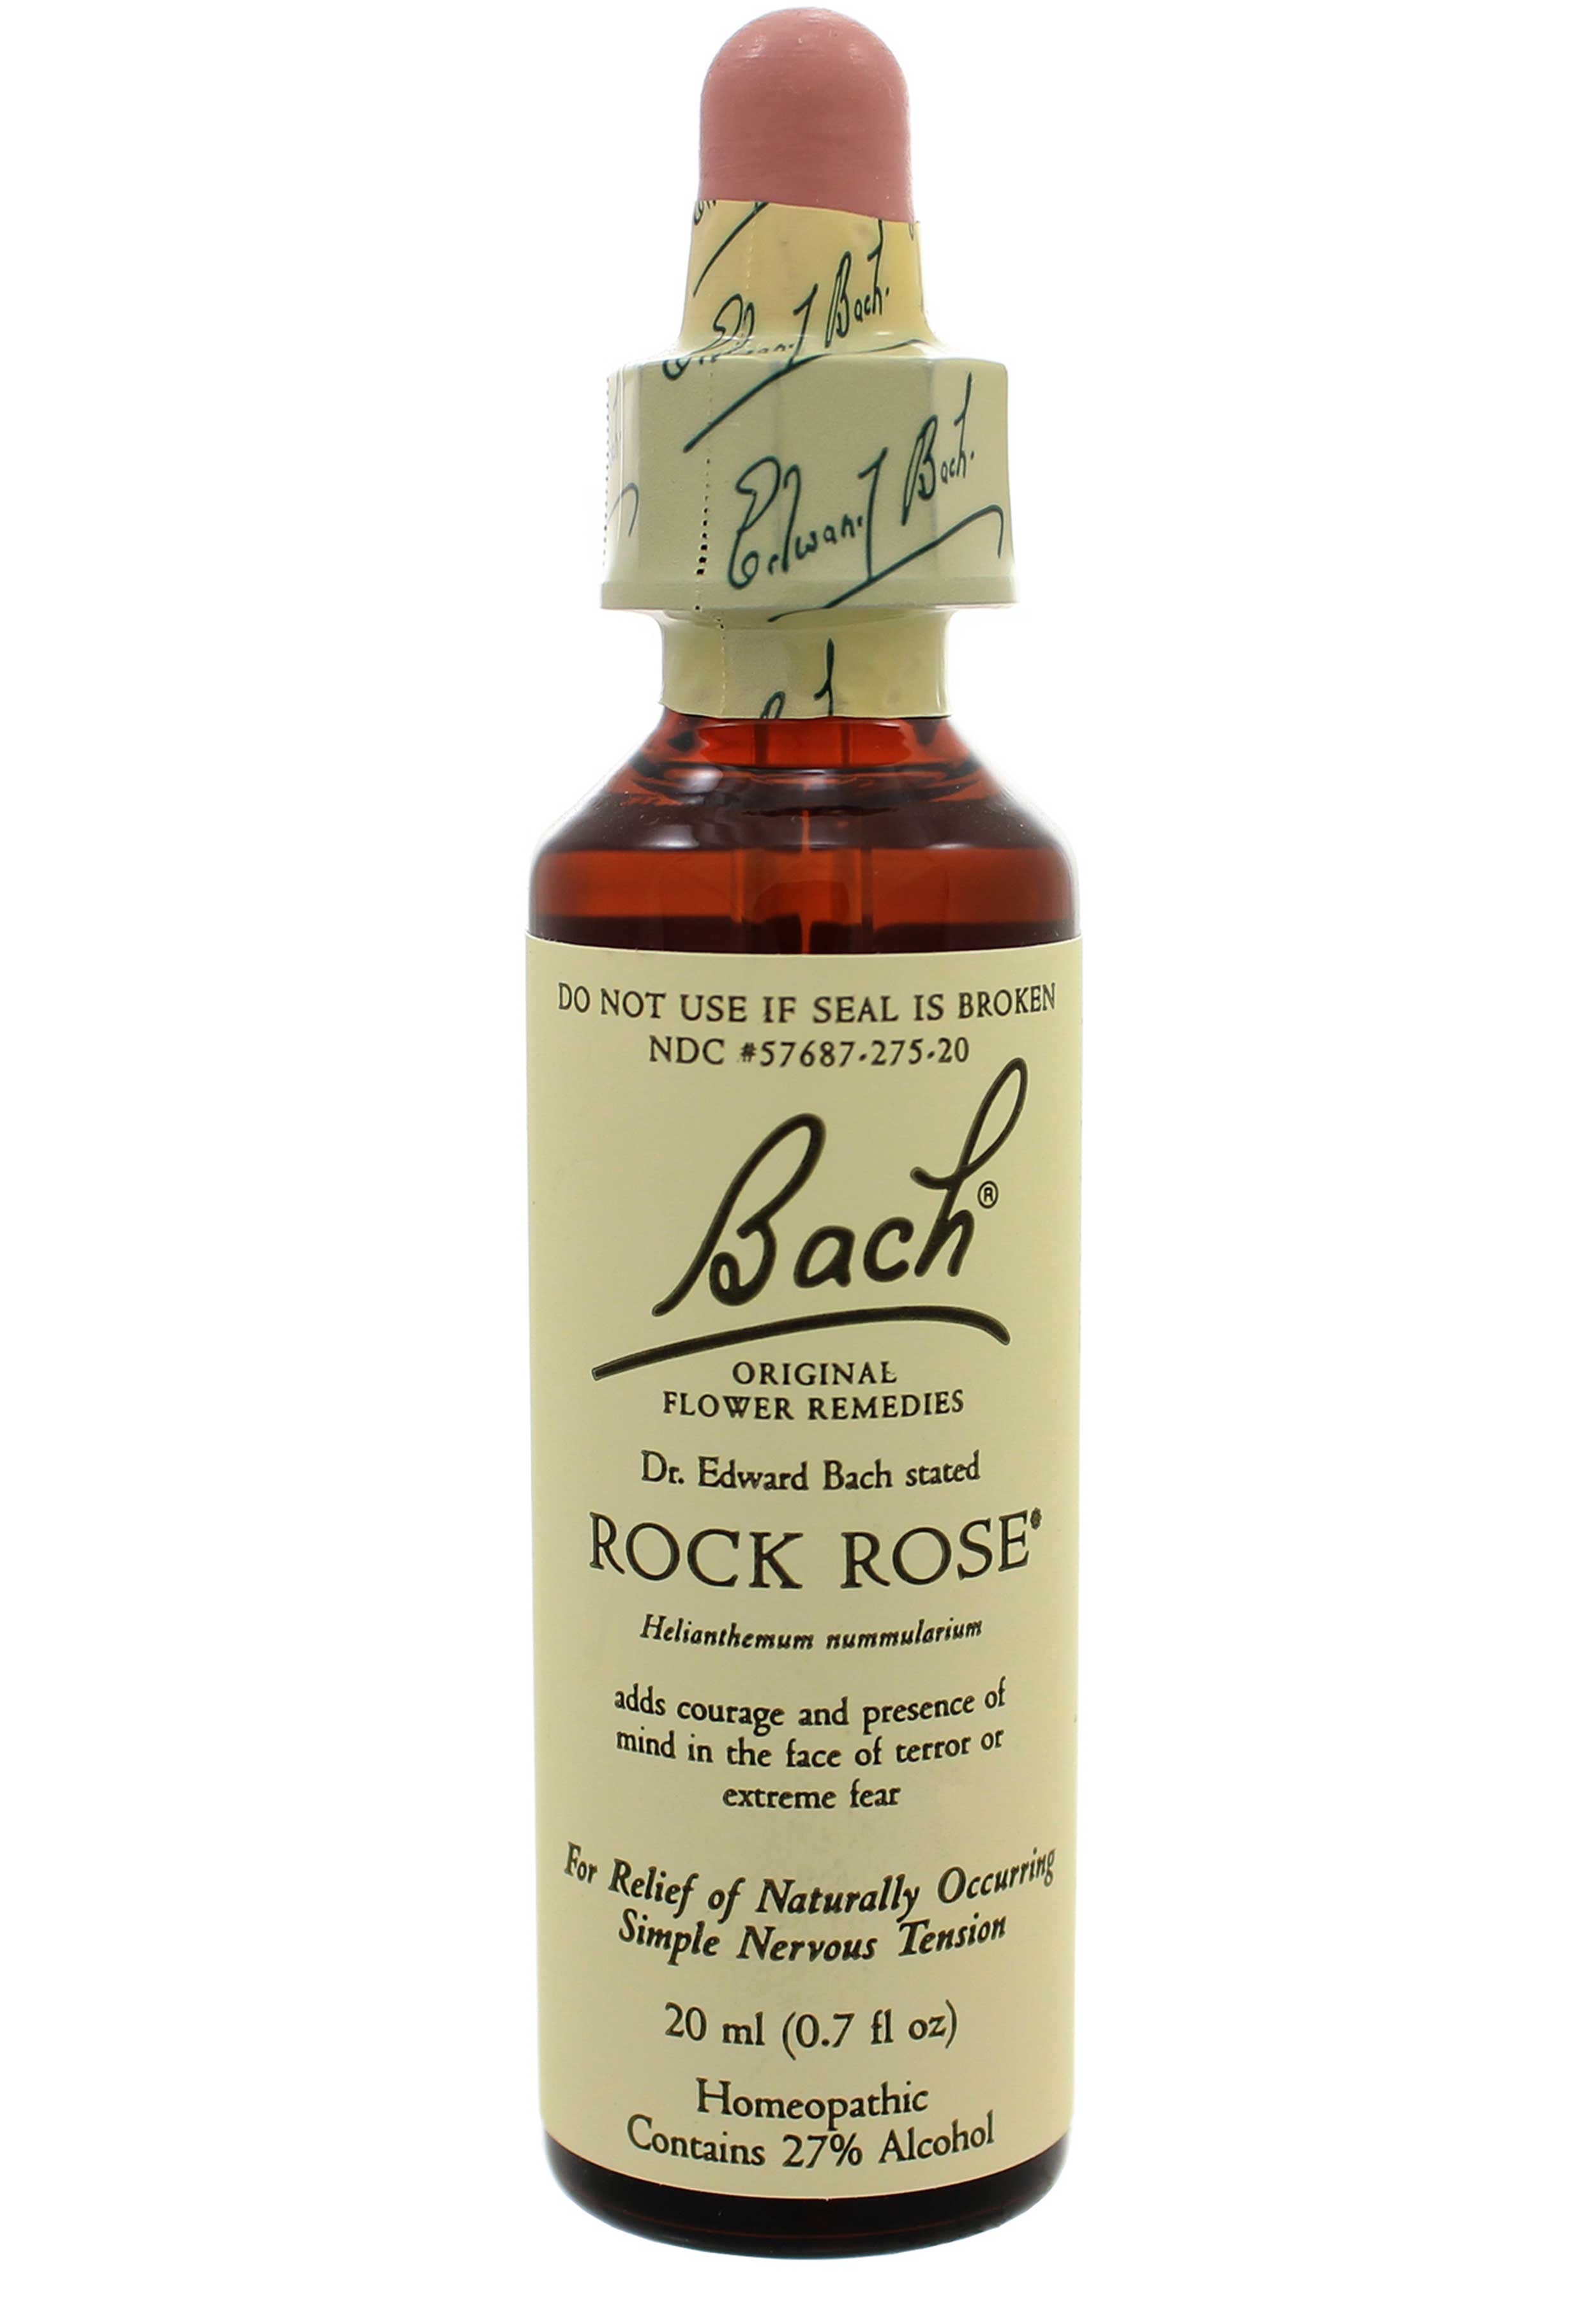 Bach Flower Remedies Rock Rose